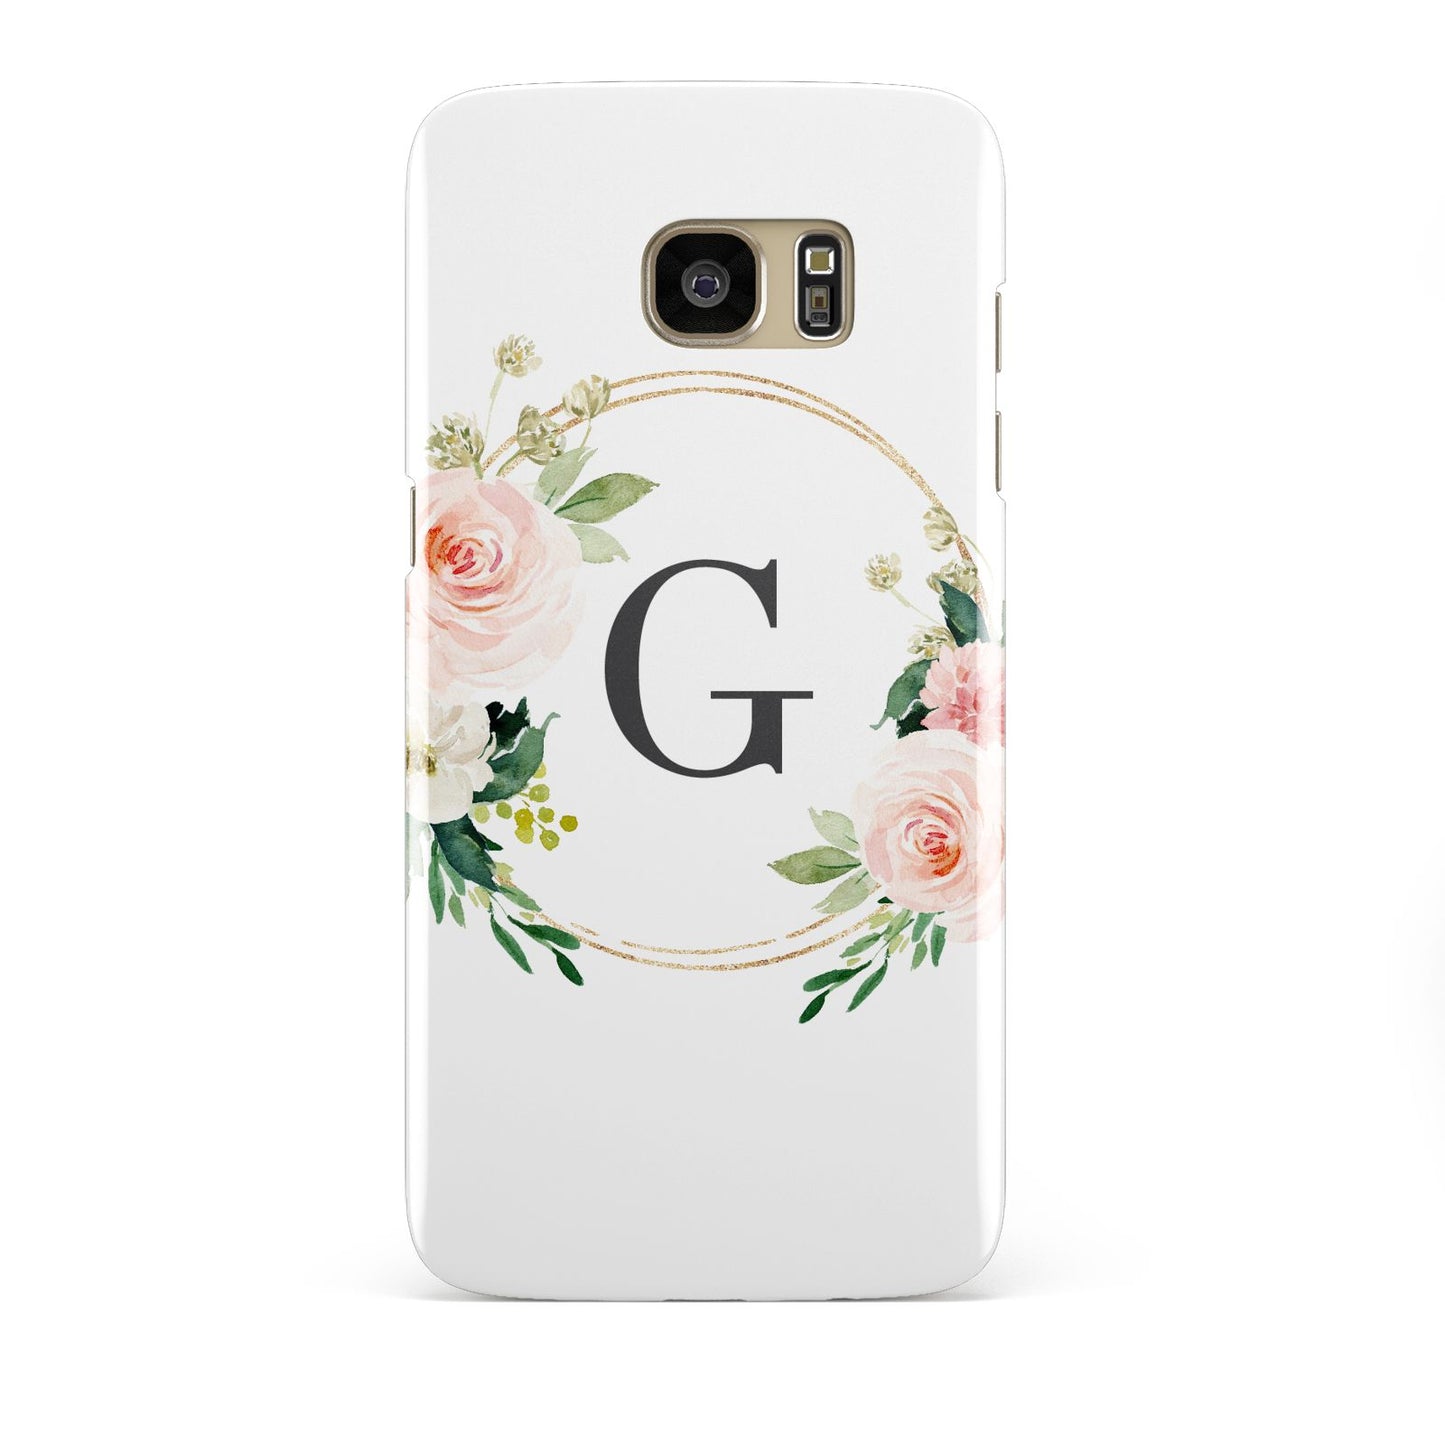 Personalised Blush Floral Wreath Samsung Galaxy S7 Edge Case